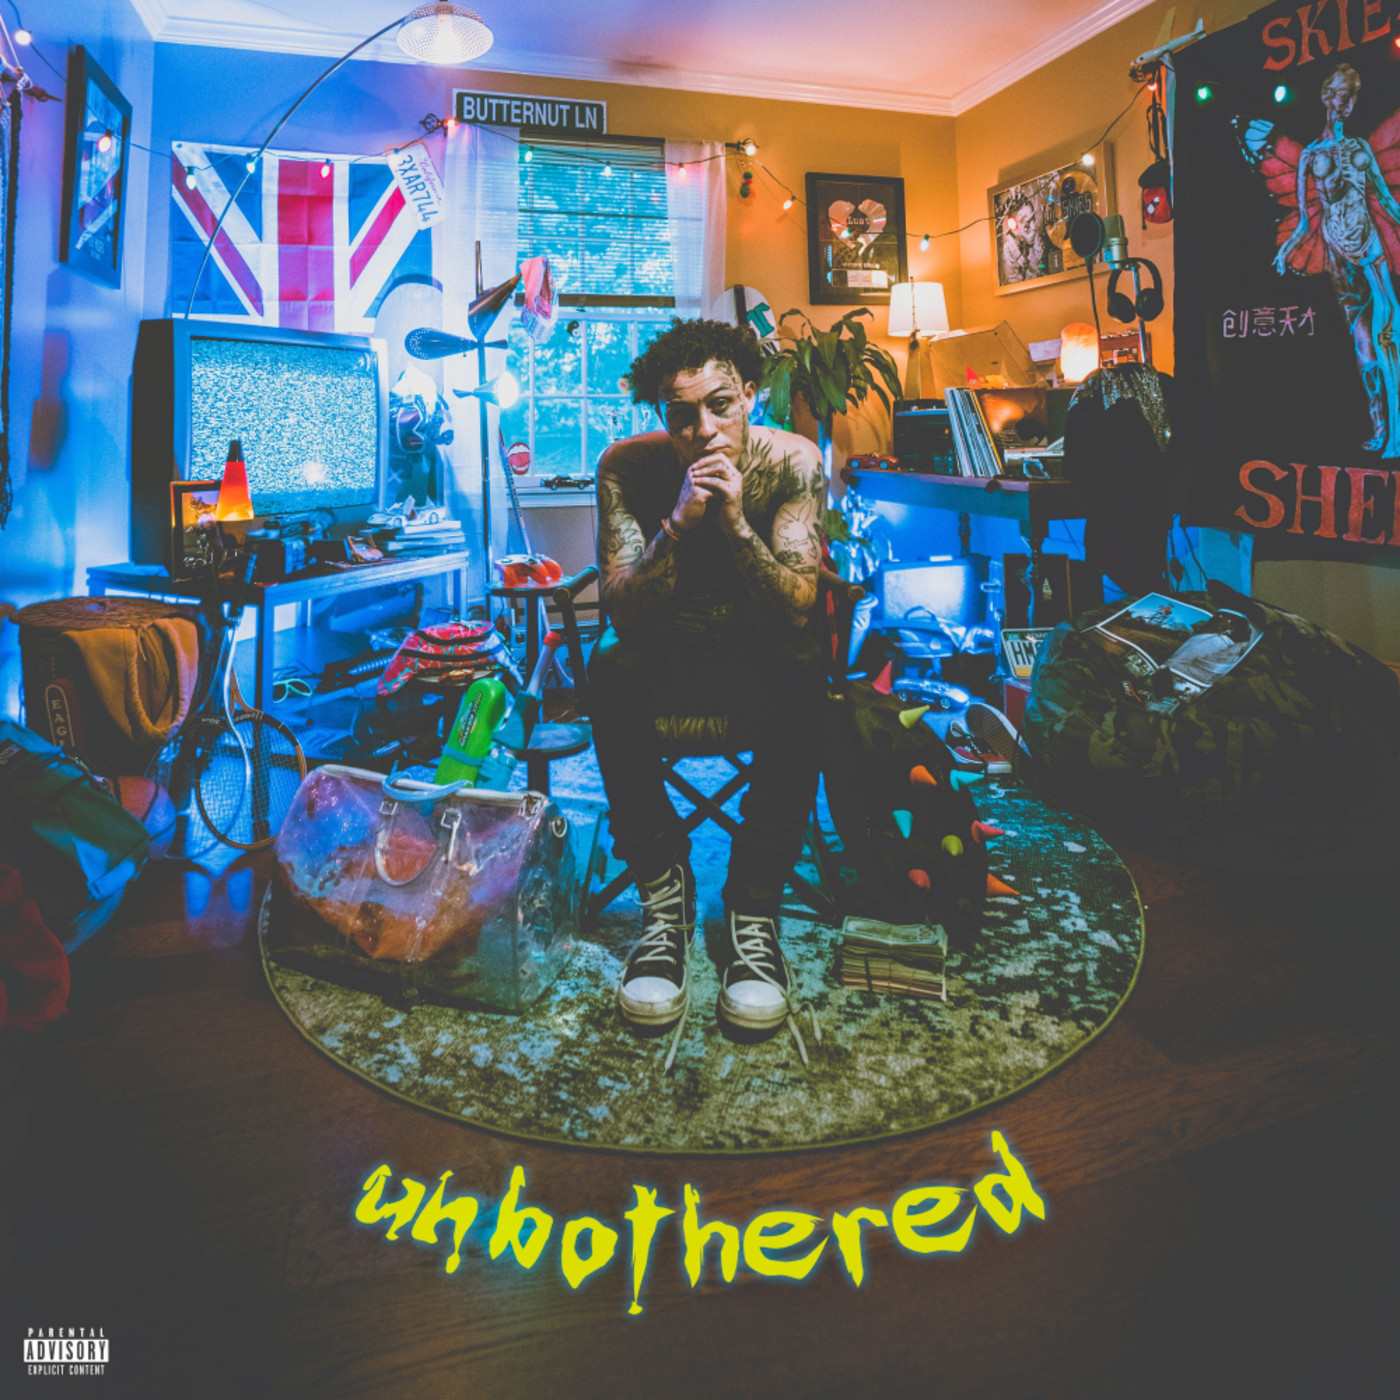 Listen to Lil Skies' Album 'Unbothered' f/ Lil Durk and Wiz Khalifa